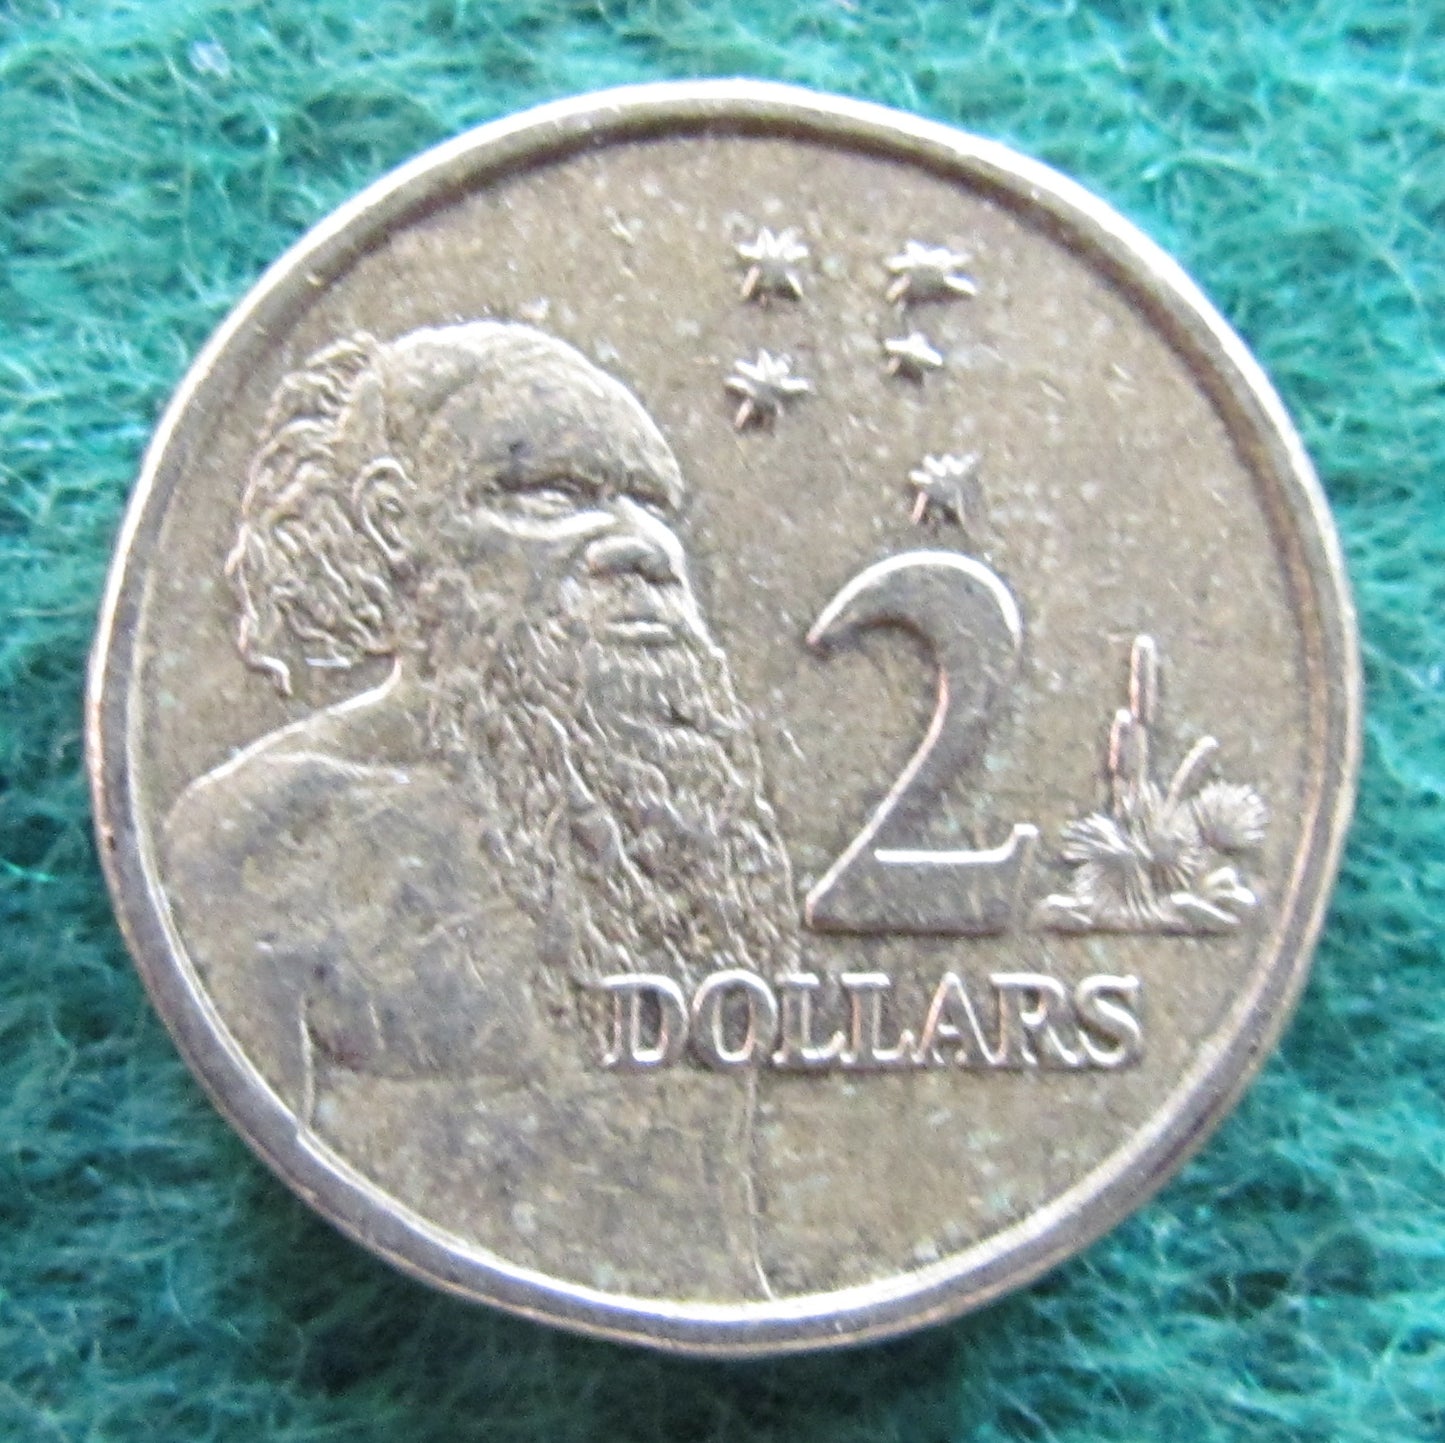 Australian 2003 2 Dollar Aboriginal Elder Queen Elizabeth Coin - Circulated